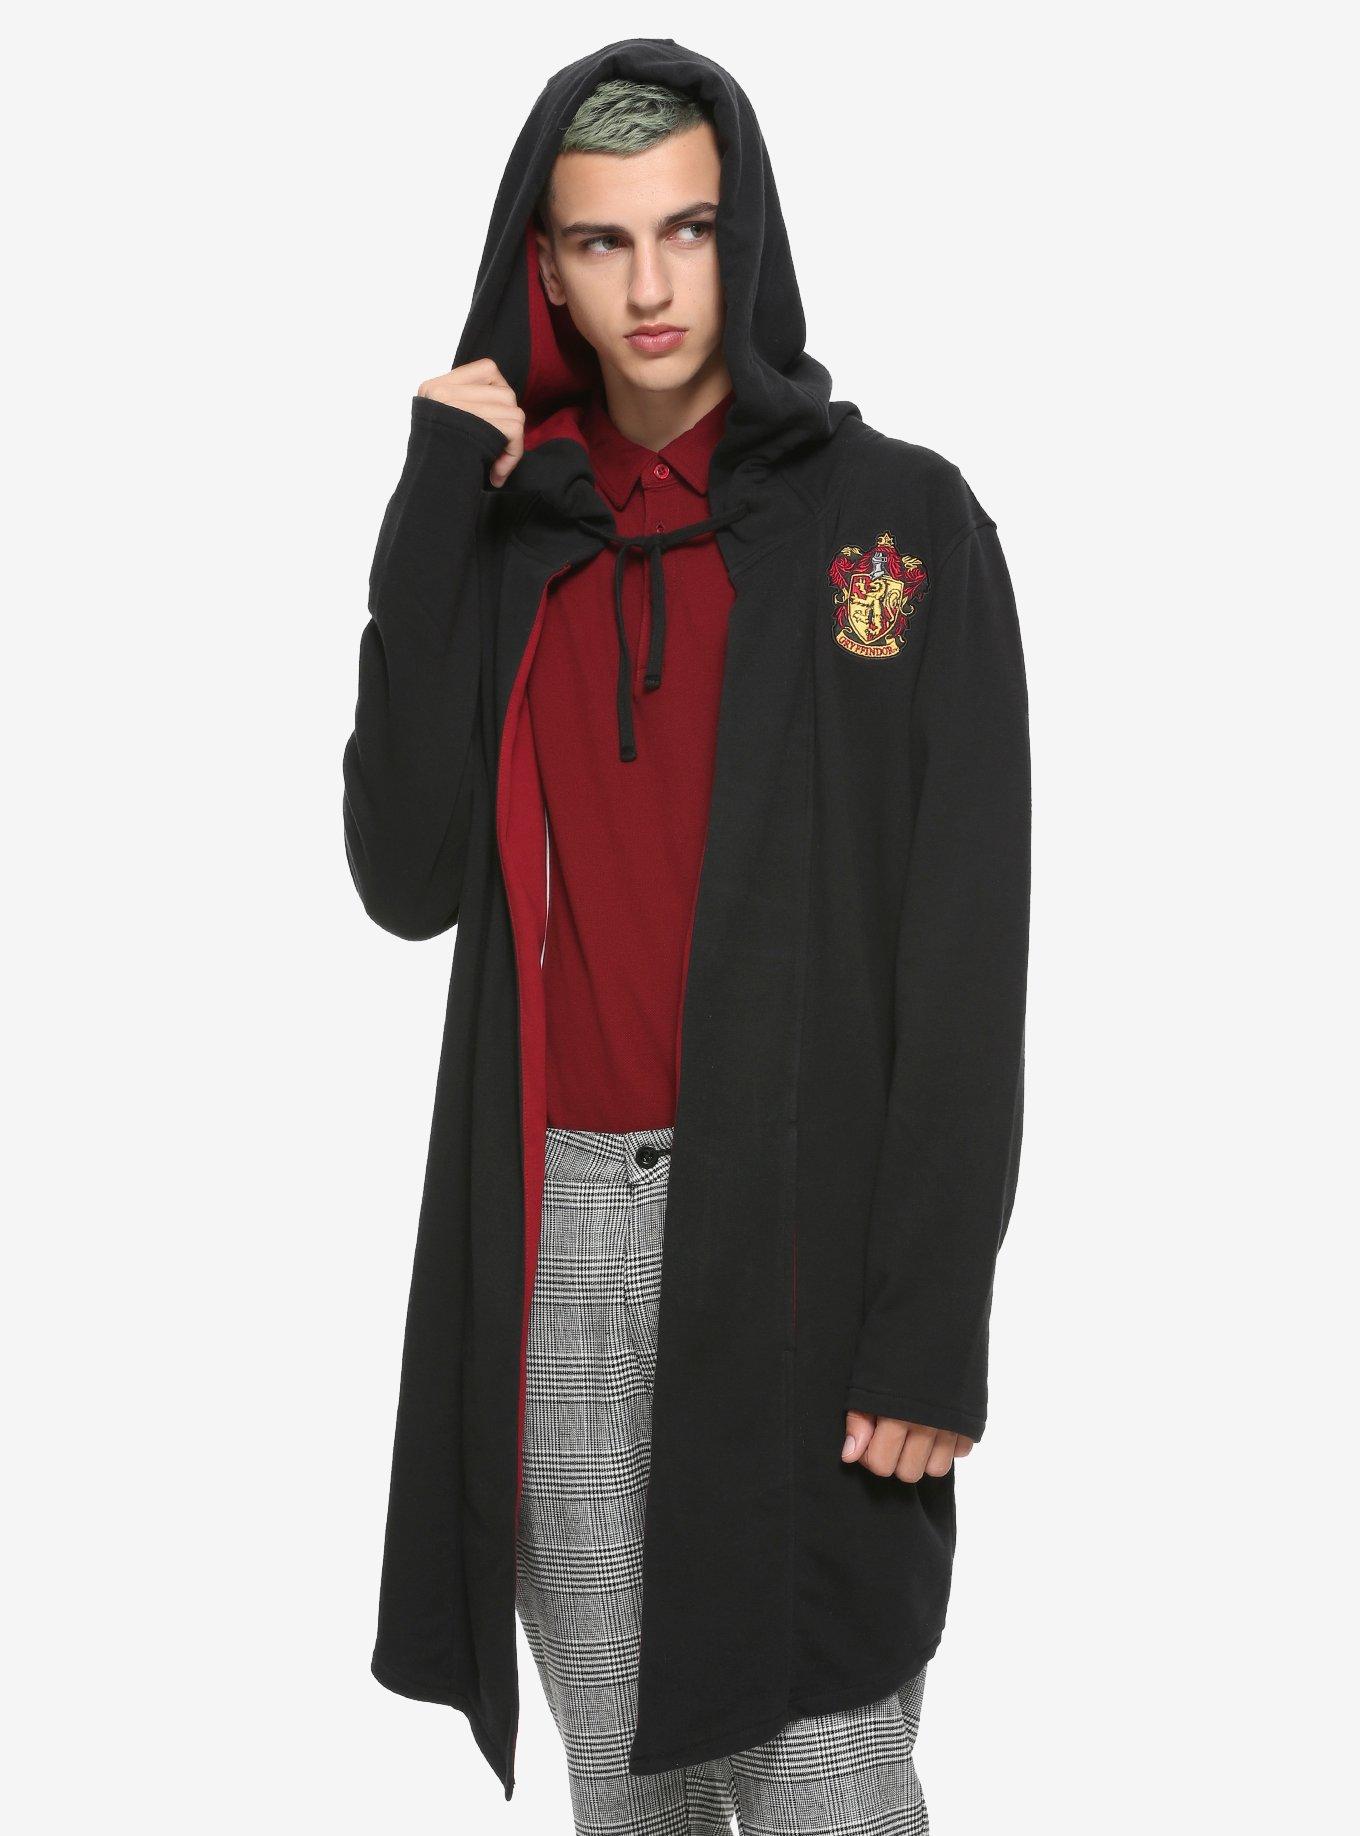 Harry Potter Gryffindor Hoodie Cloak